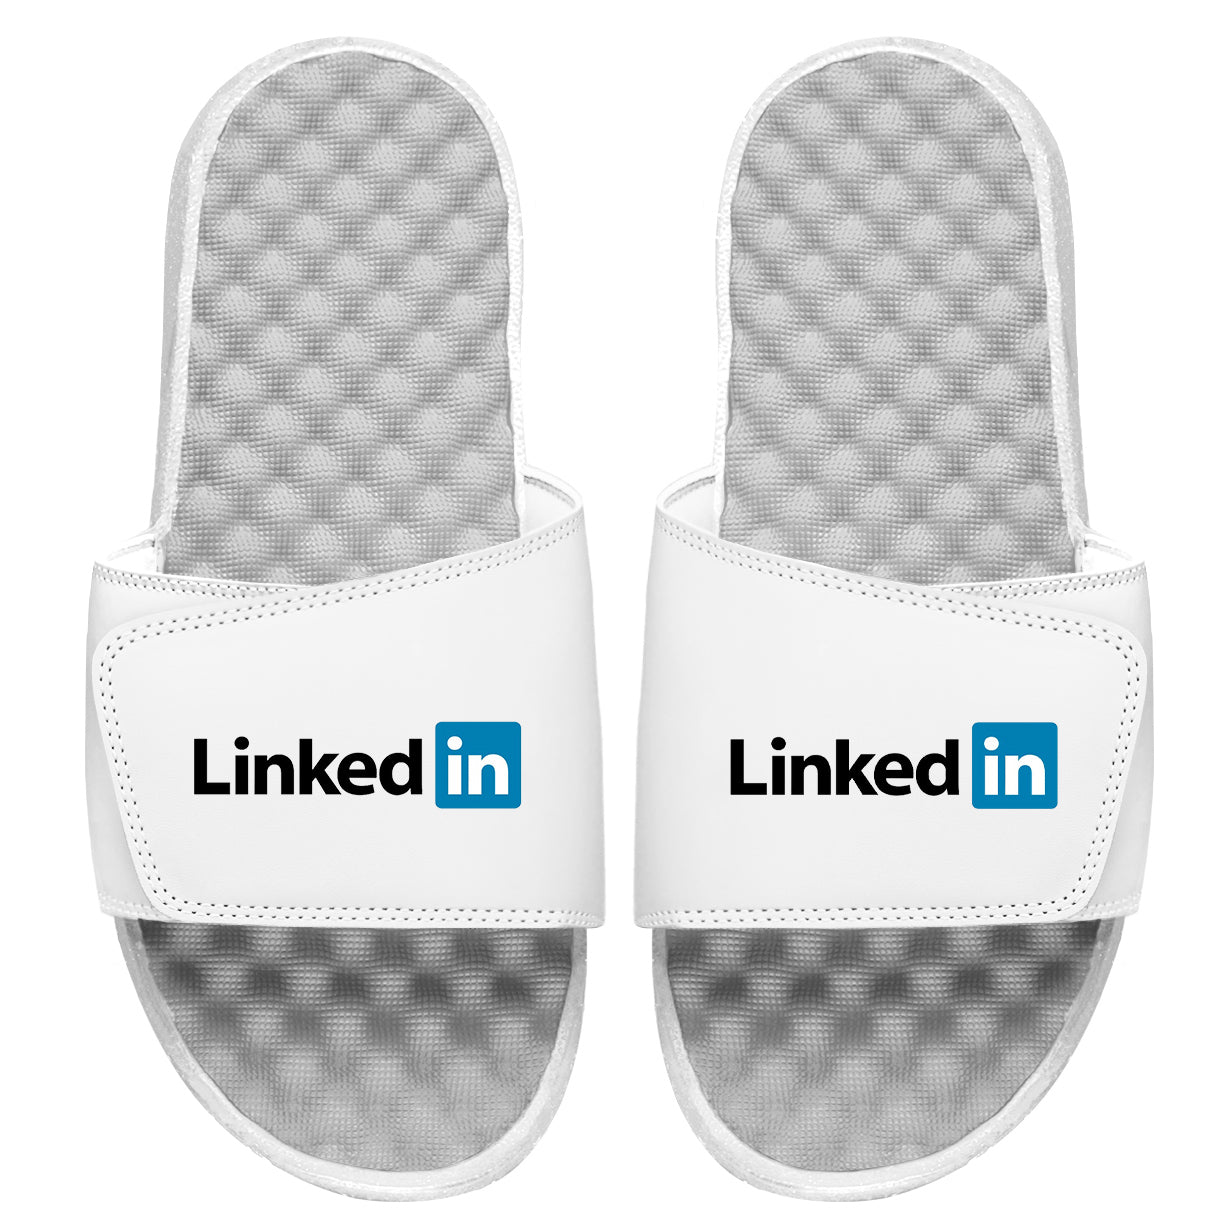 LinkedIn Slides